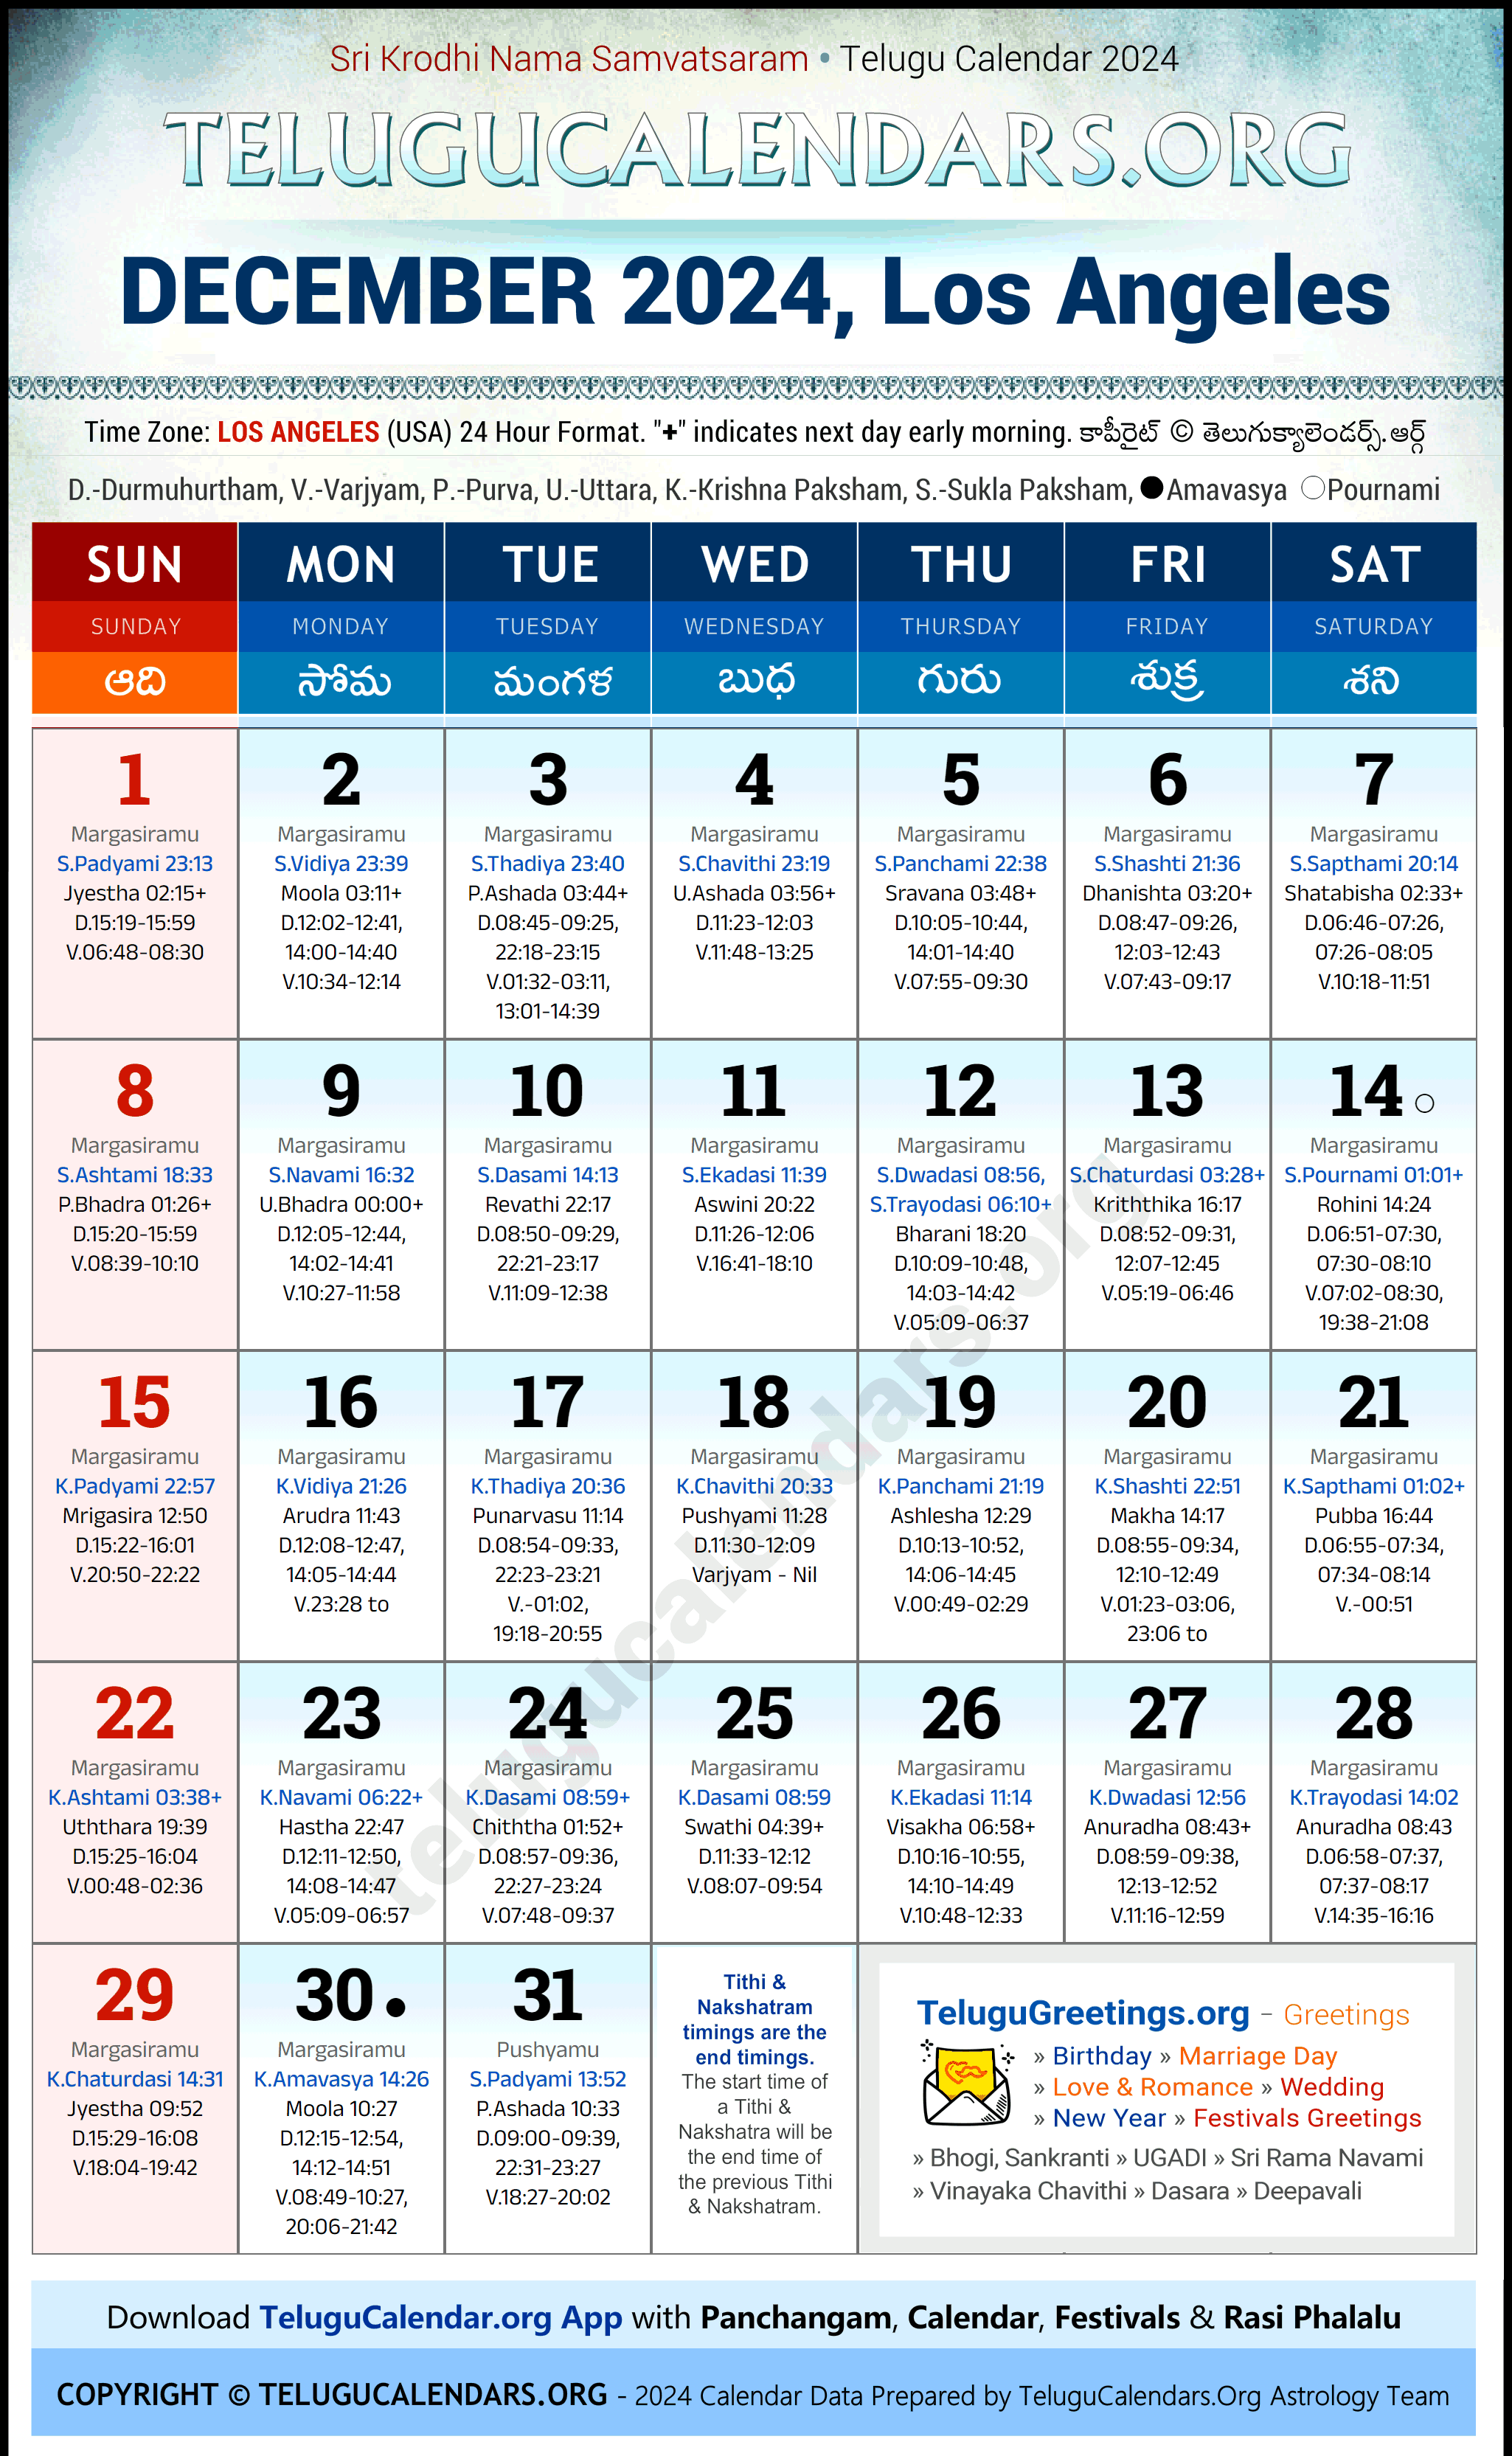 Telugu Calendar 2024 December Festivals for Los Angeles